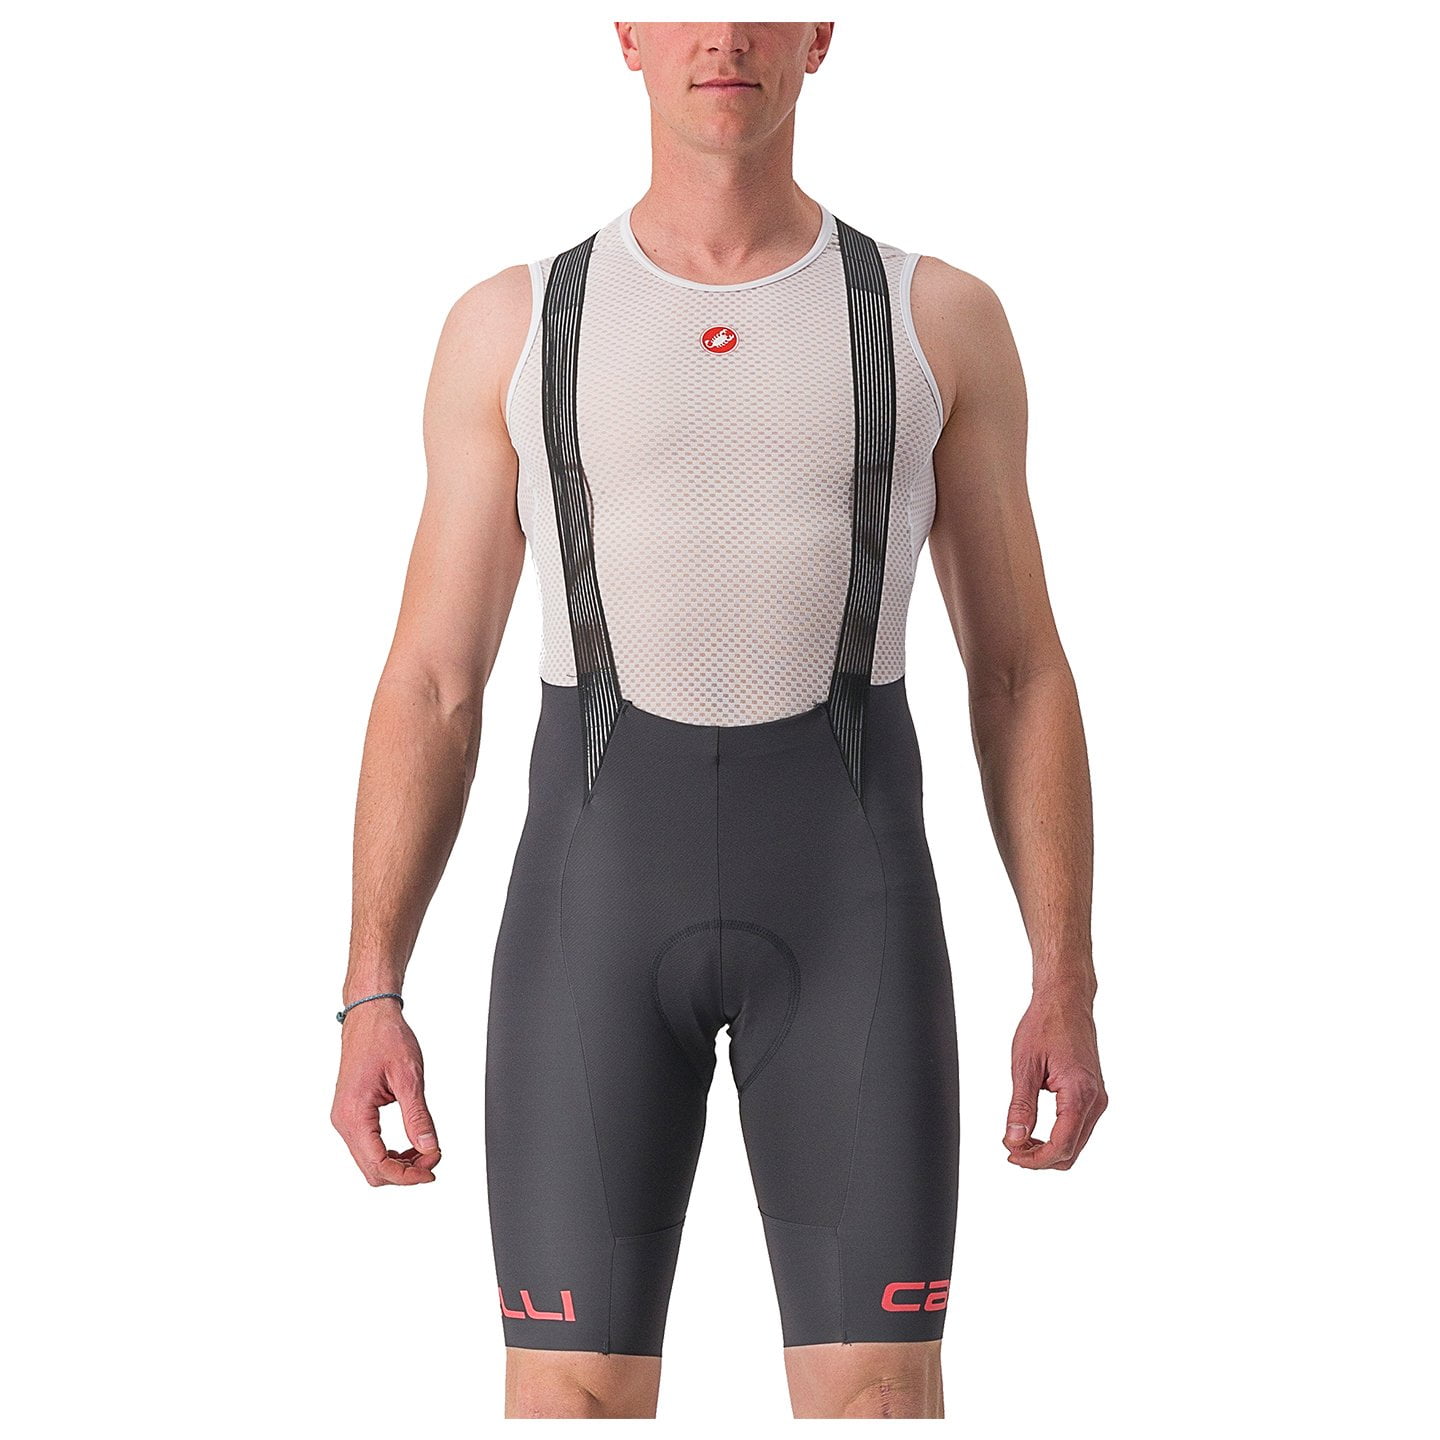 CASTELLI Free Aero RC Classic Bib Shorts Bib Shorts, for men, size 2XL, Cycle shorts, Cycling clothing